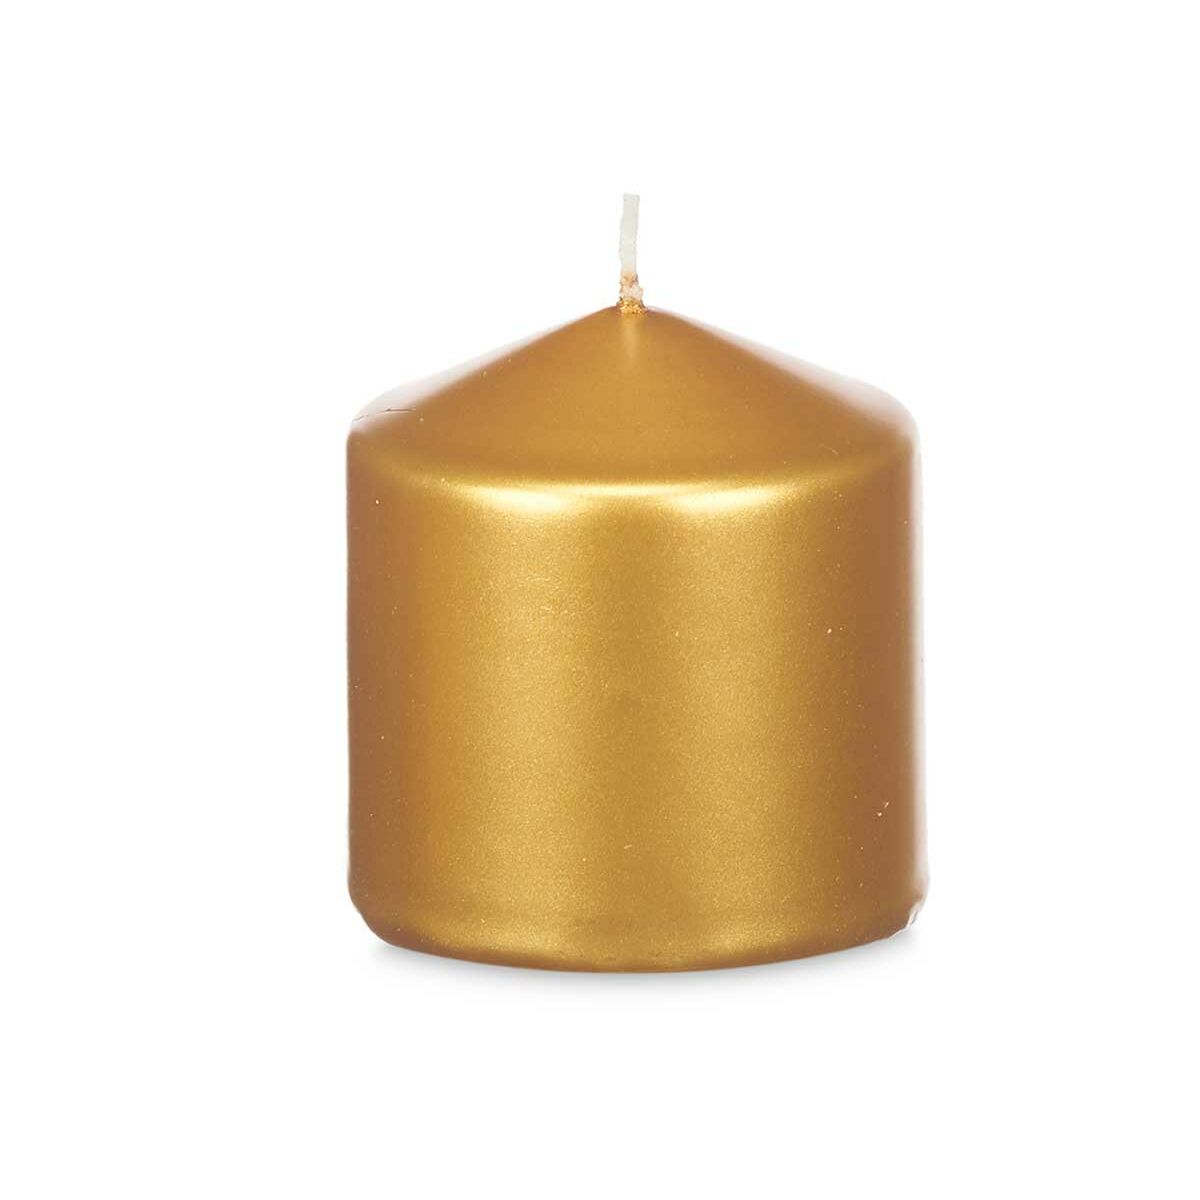 Kerze Gold 7 x 7,5 x 7 cm (24 Stück)